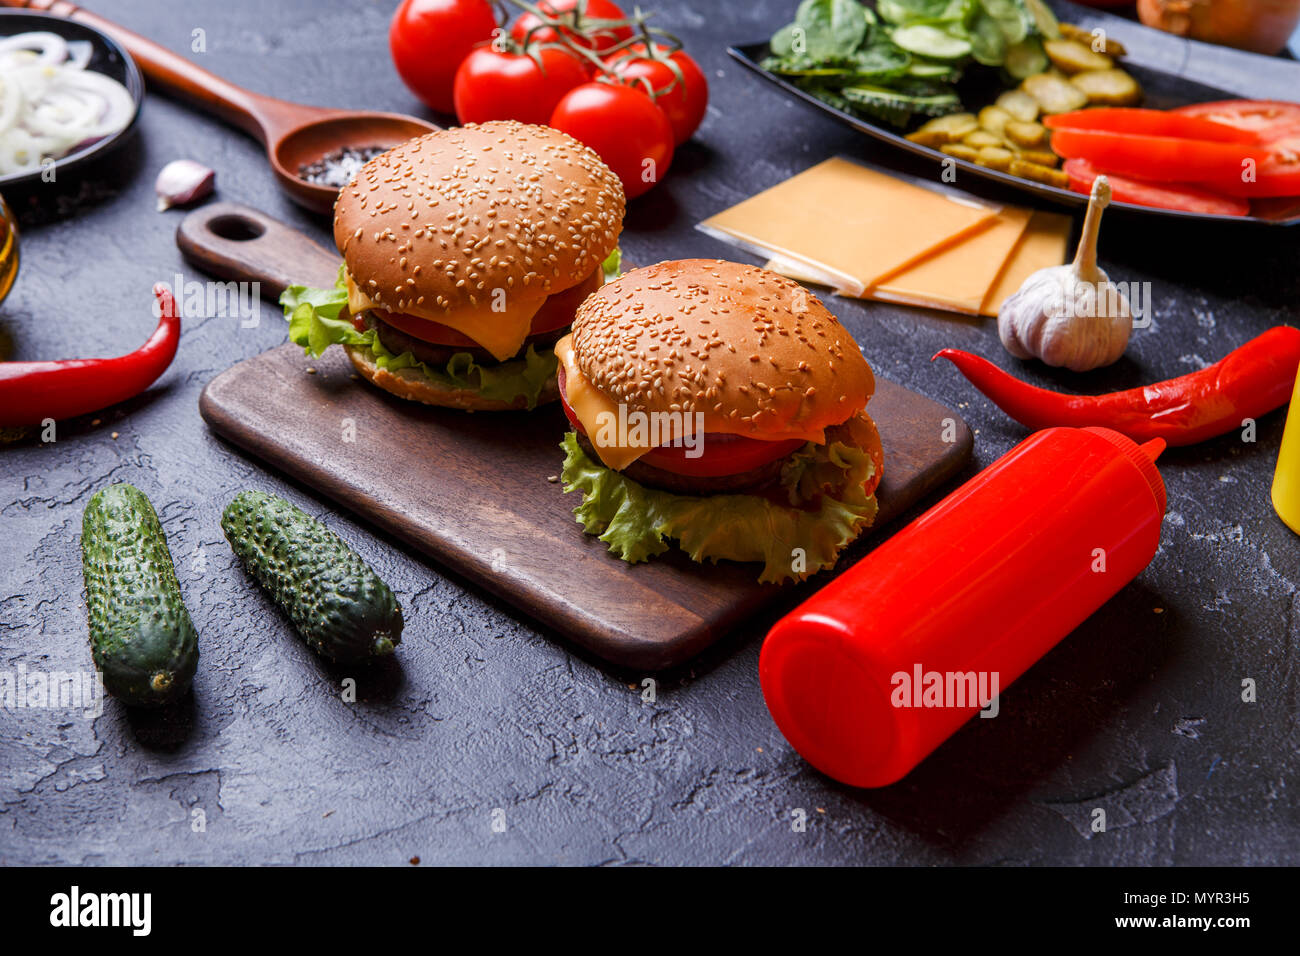 Foto von zwei Hamburger, Paprika, Käse, Tomaten Stockfoto